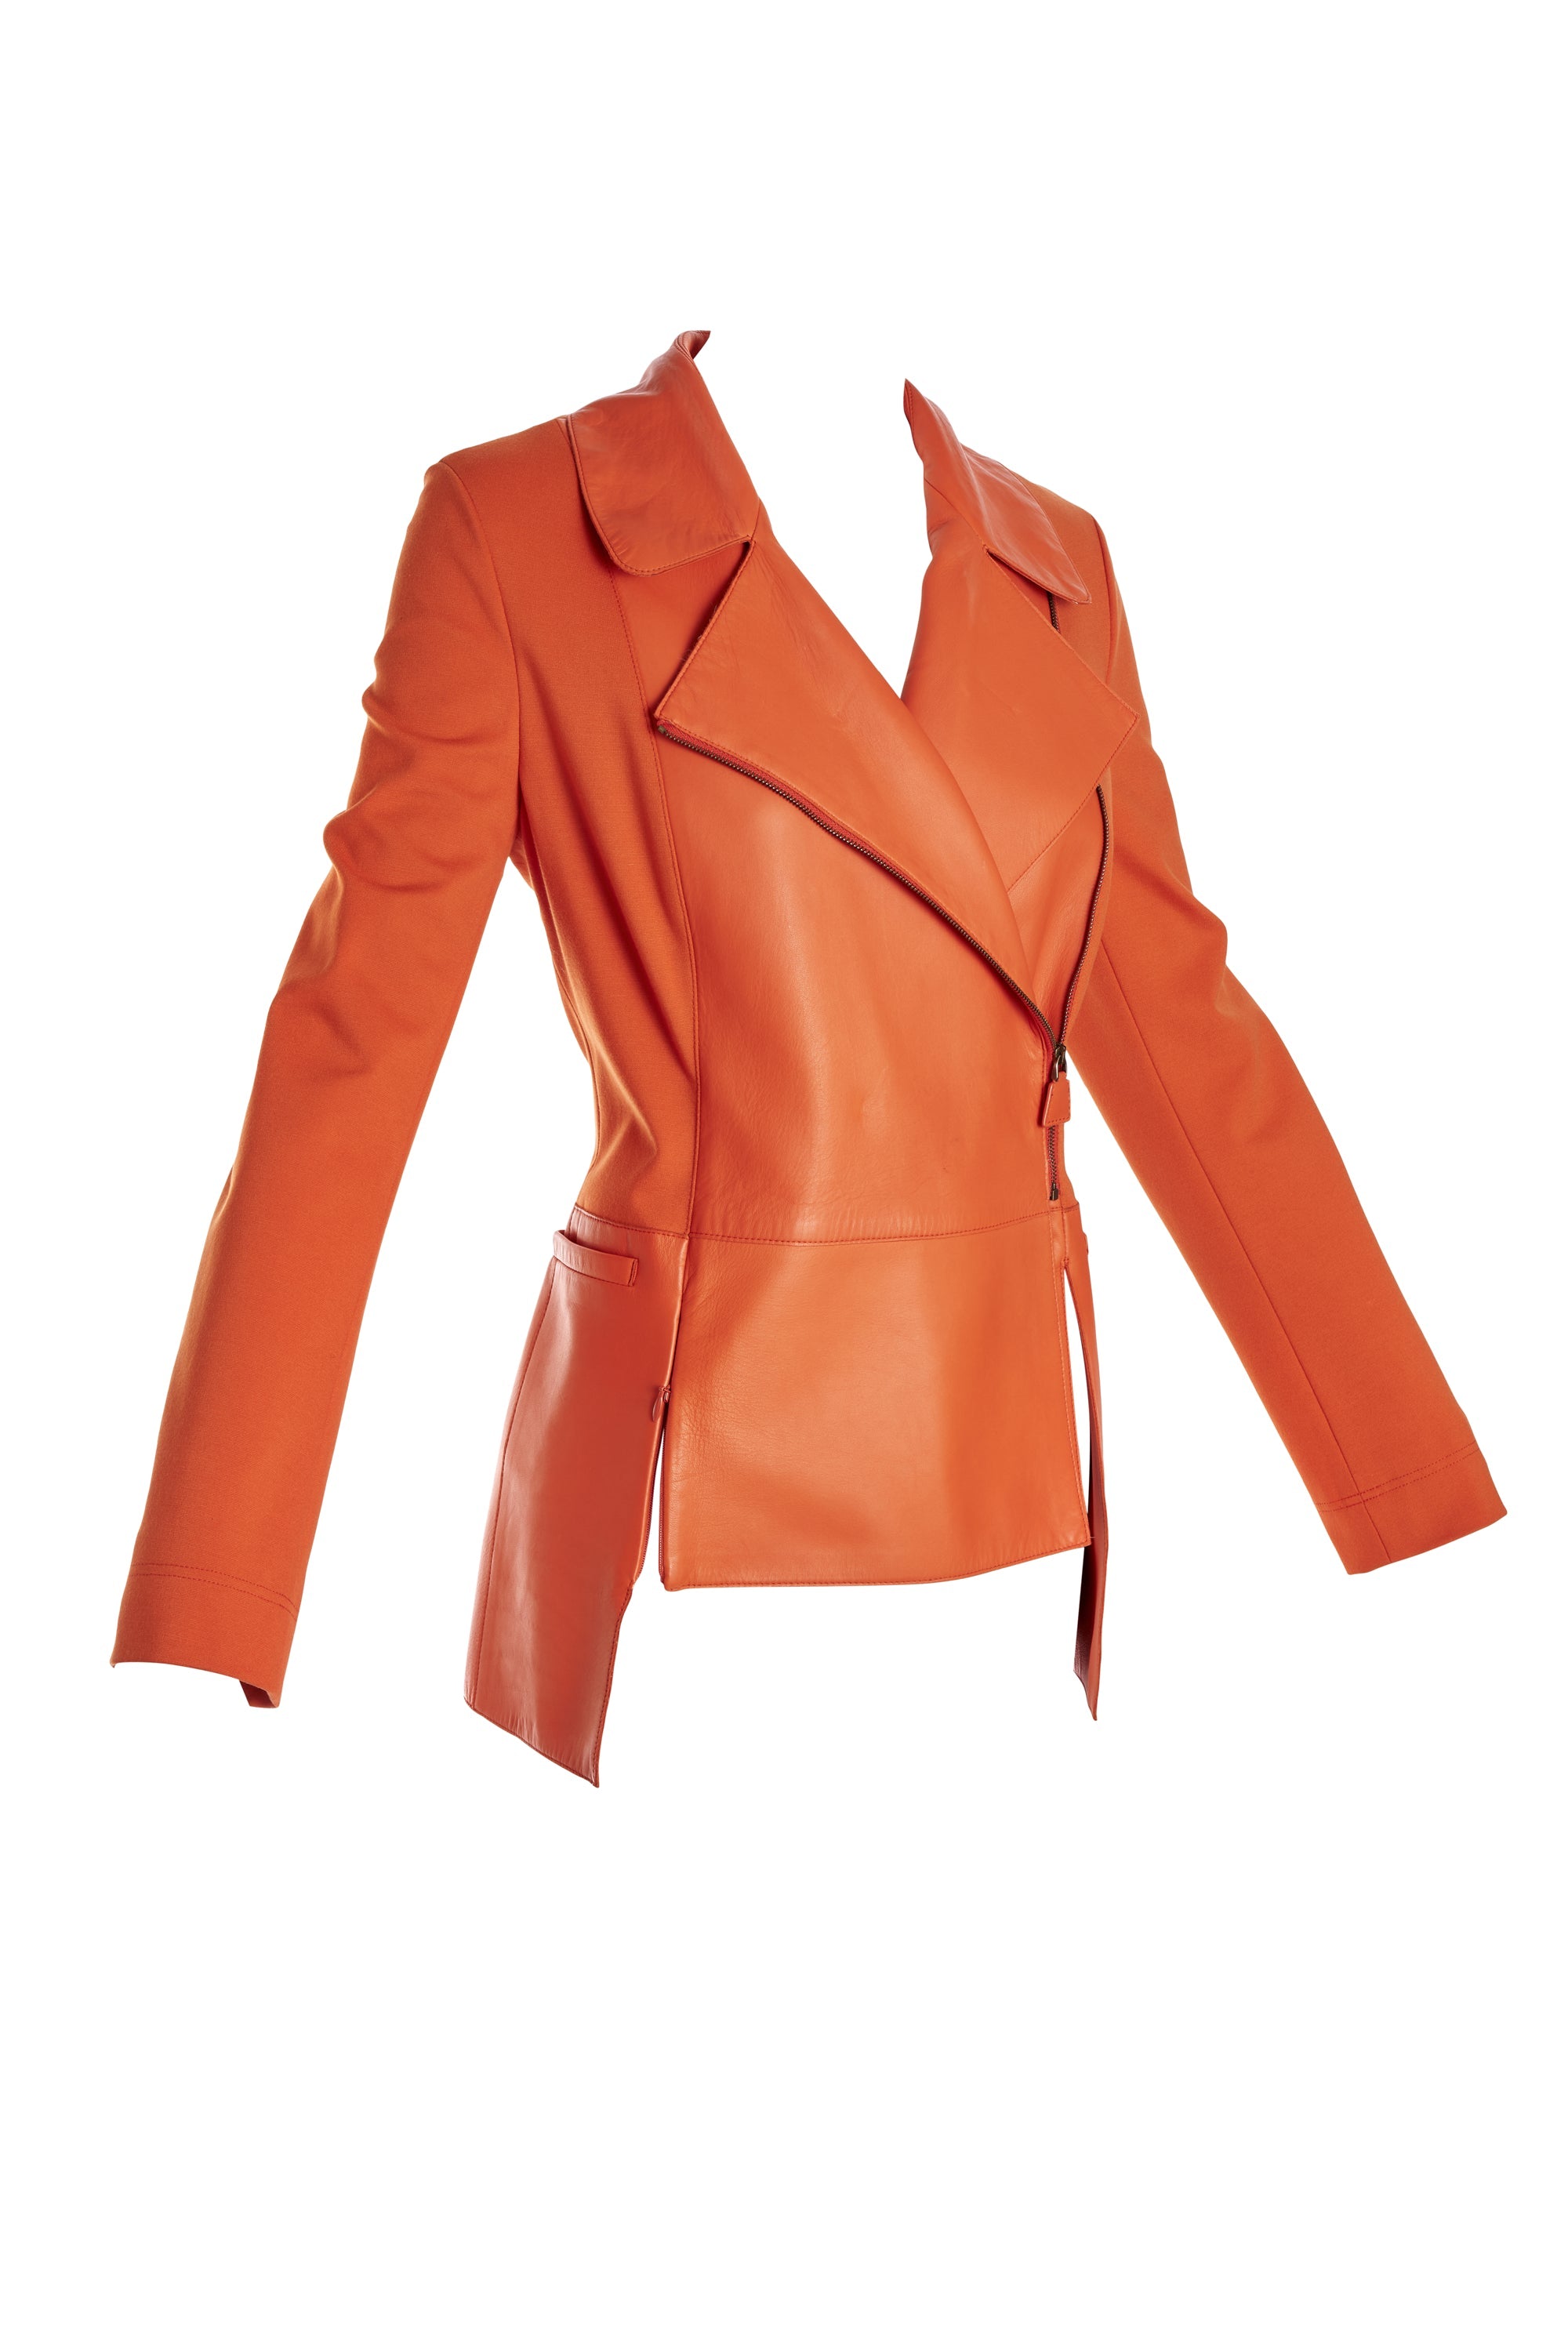 Akris Orange Knit + Leather Jacket - Foxy Couture Carmel